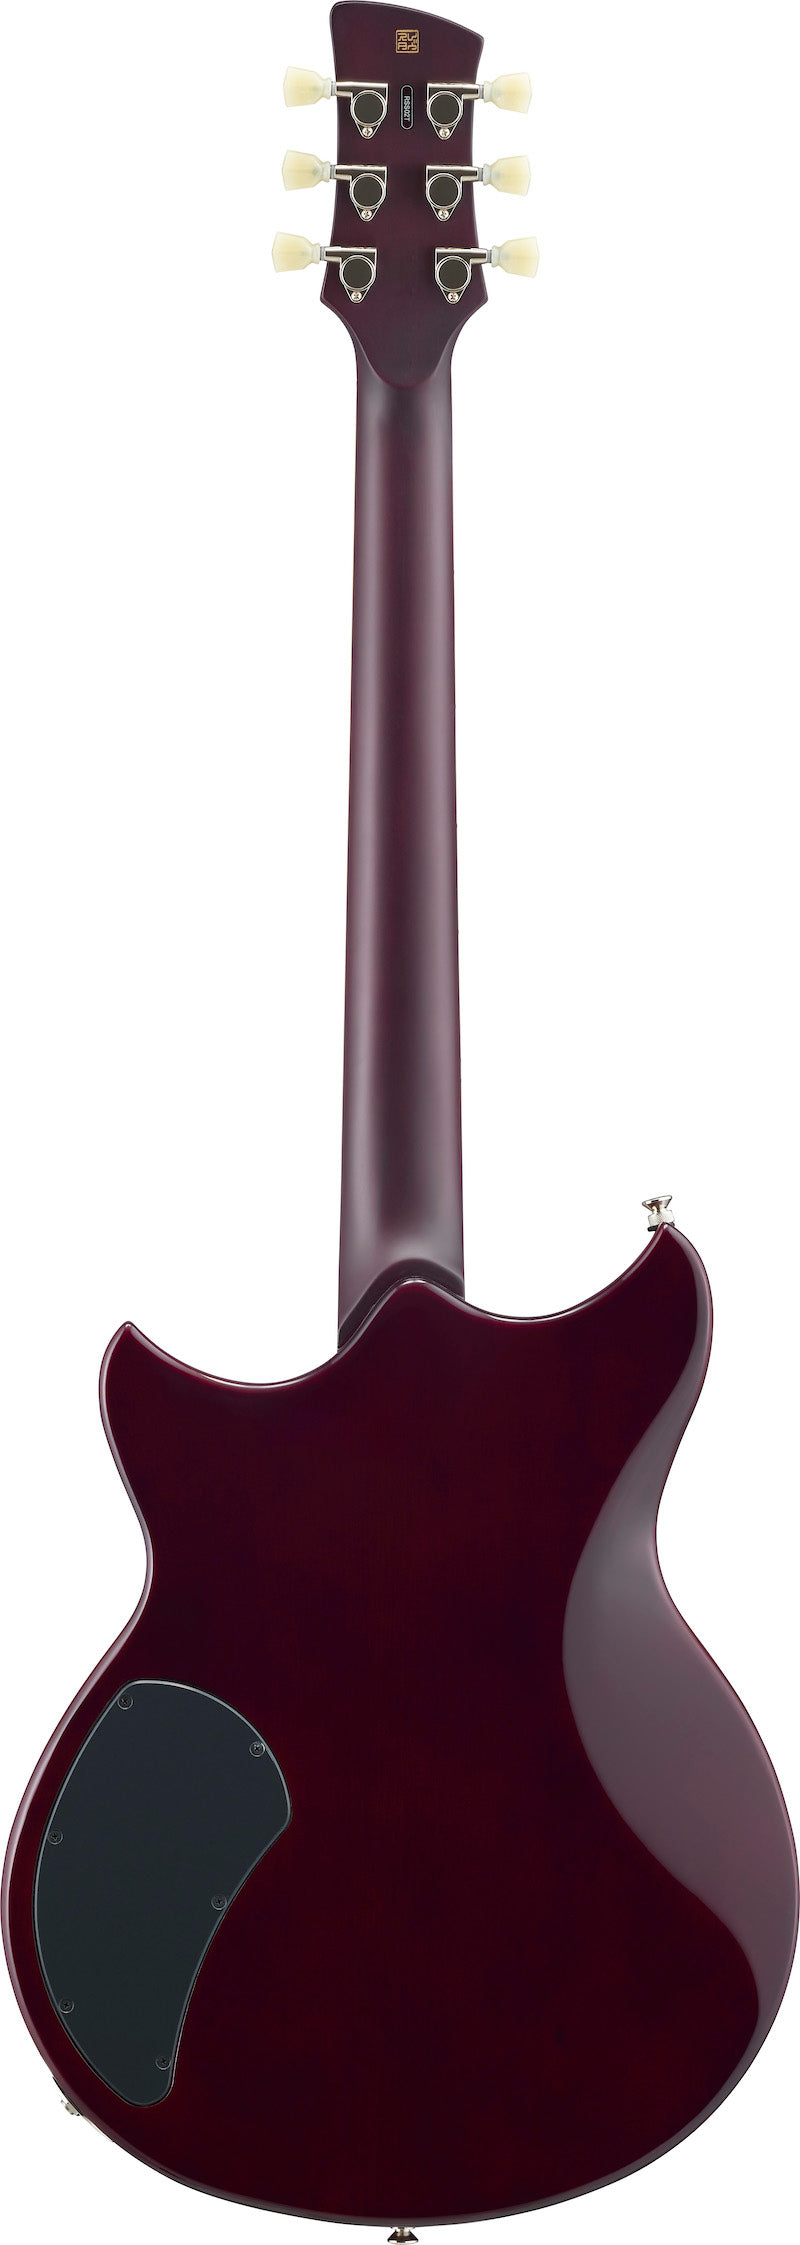 Yamaha Revstar RSS02T HML Electric Guitar - Hot Merlot